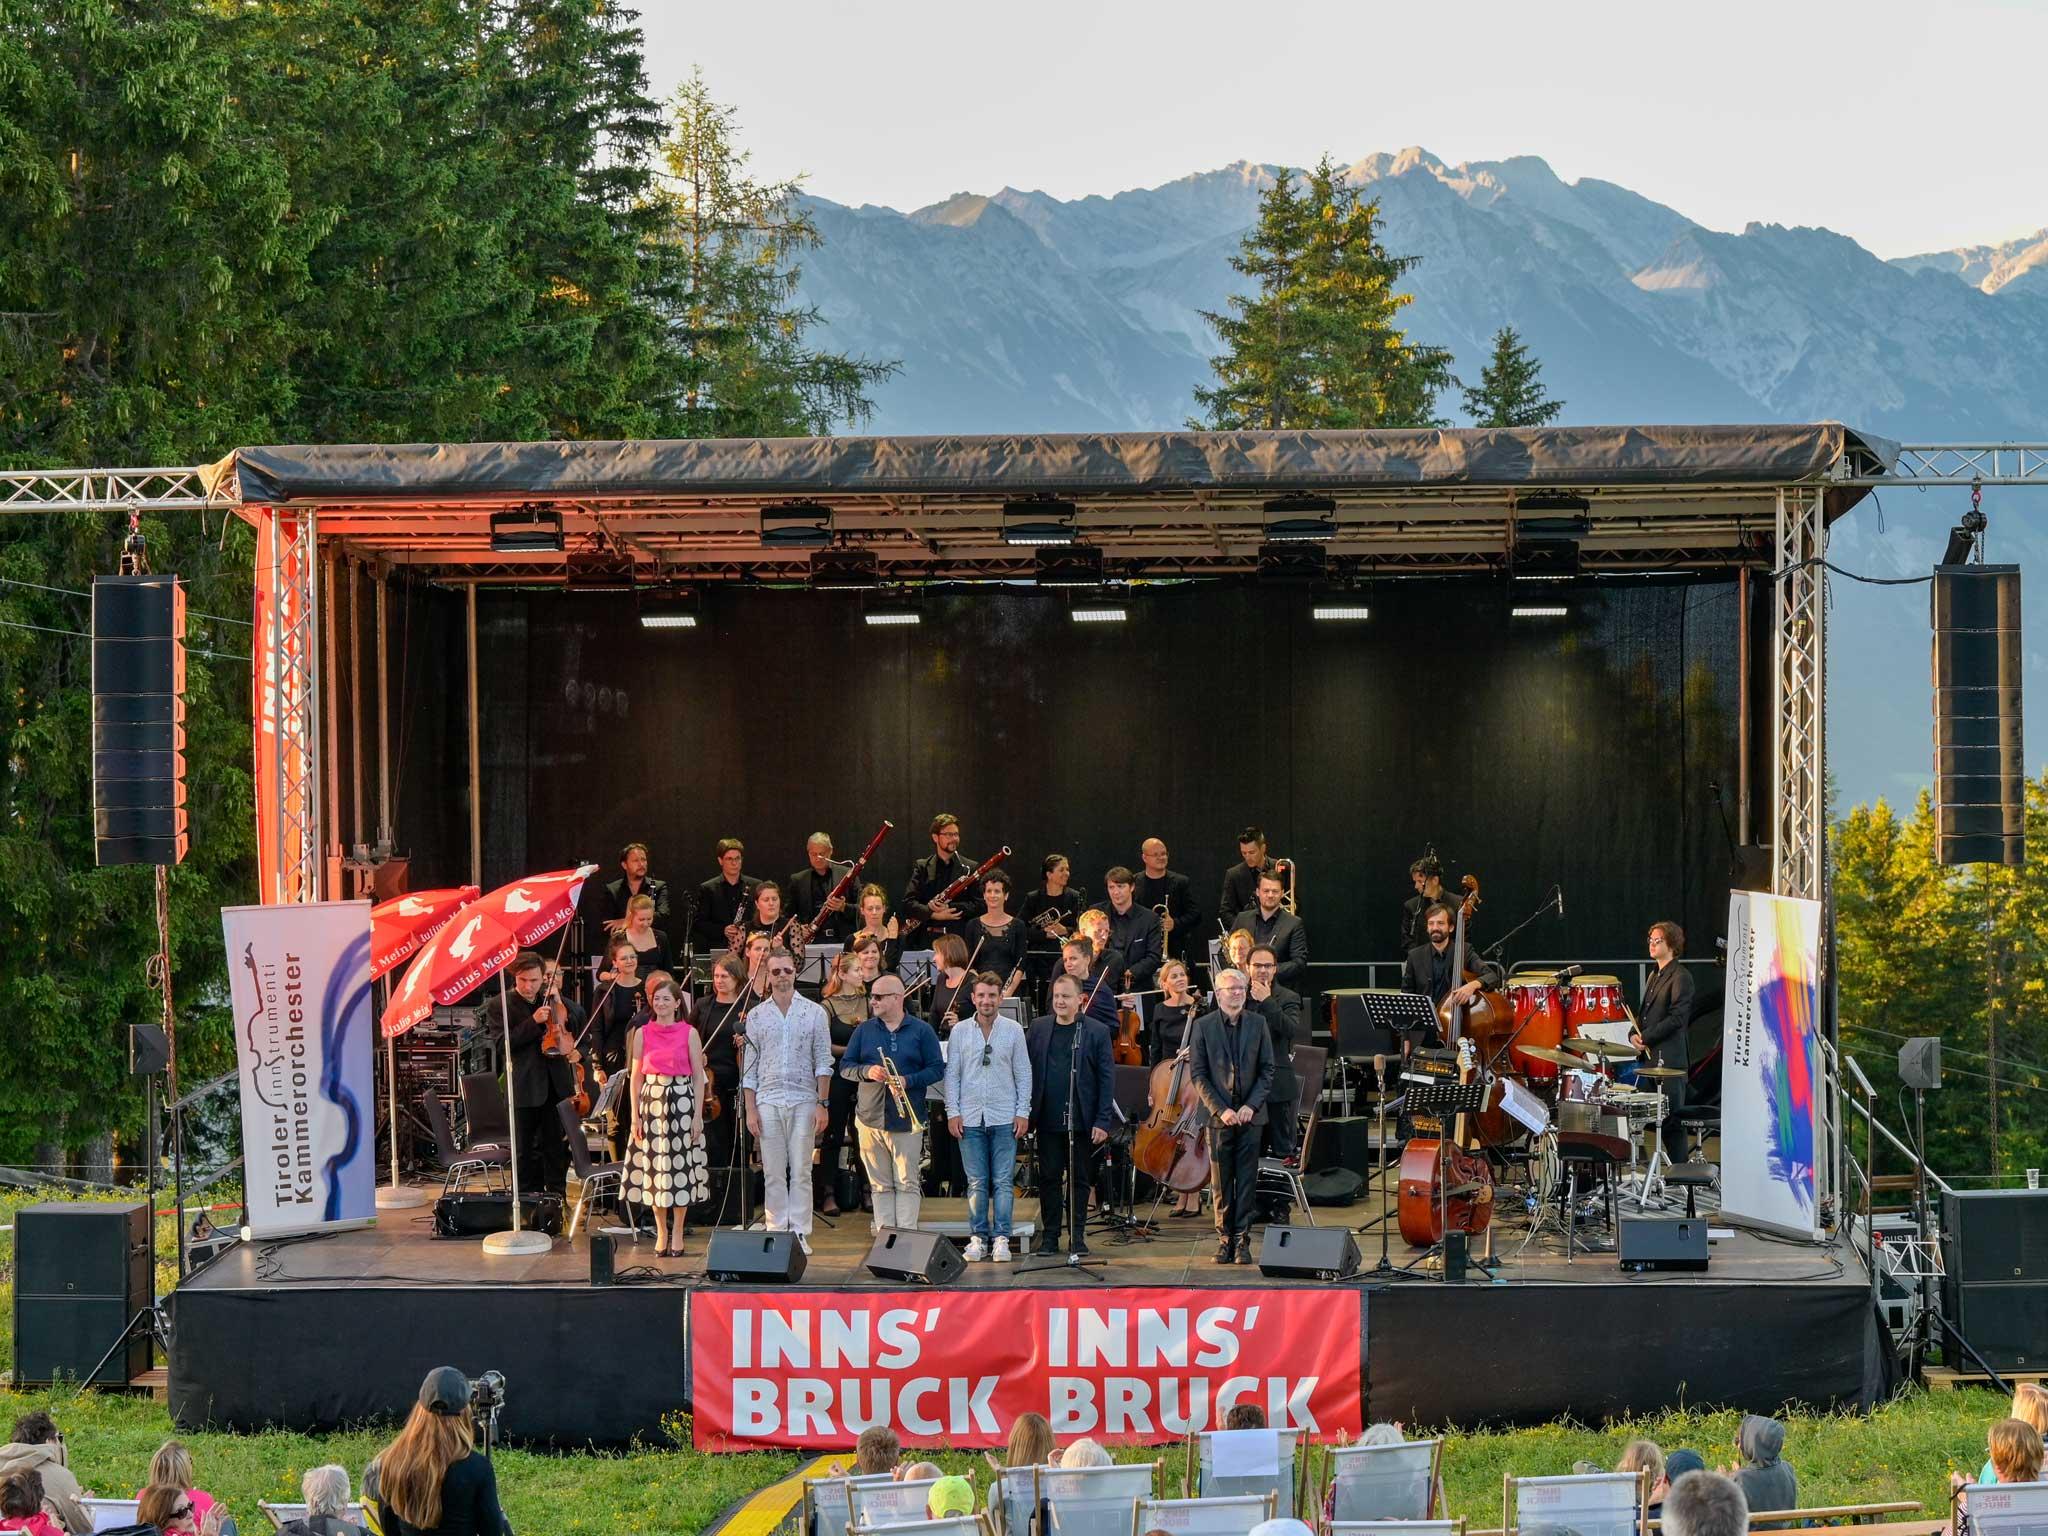 Klassik am Berg 1620m - Klassik-Open-Air Konzert in einzigartiger Kulisse